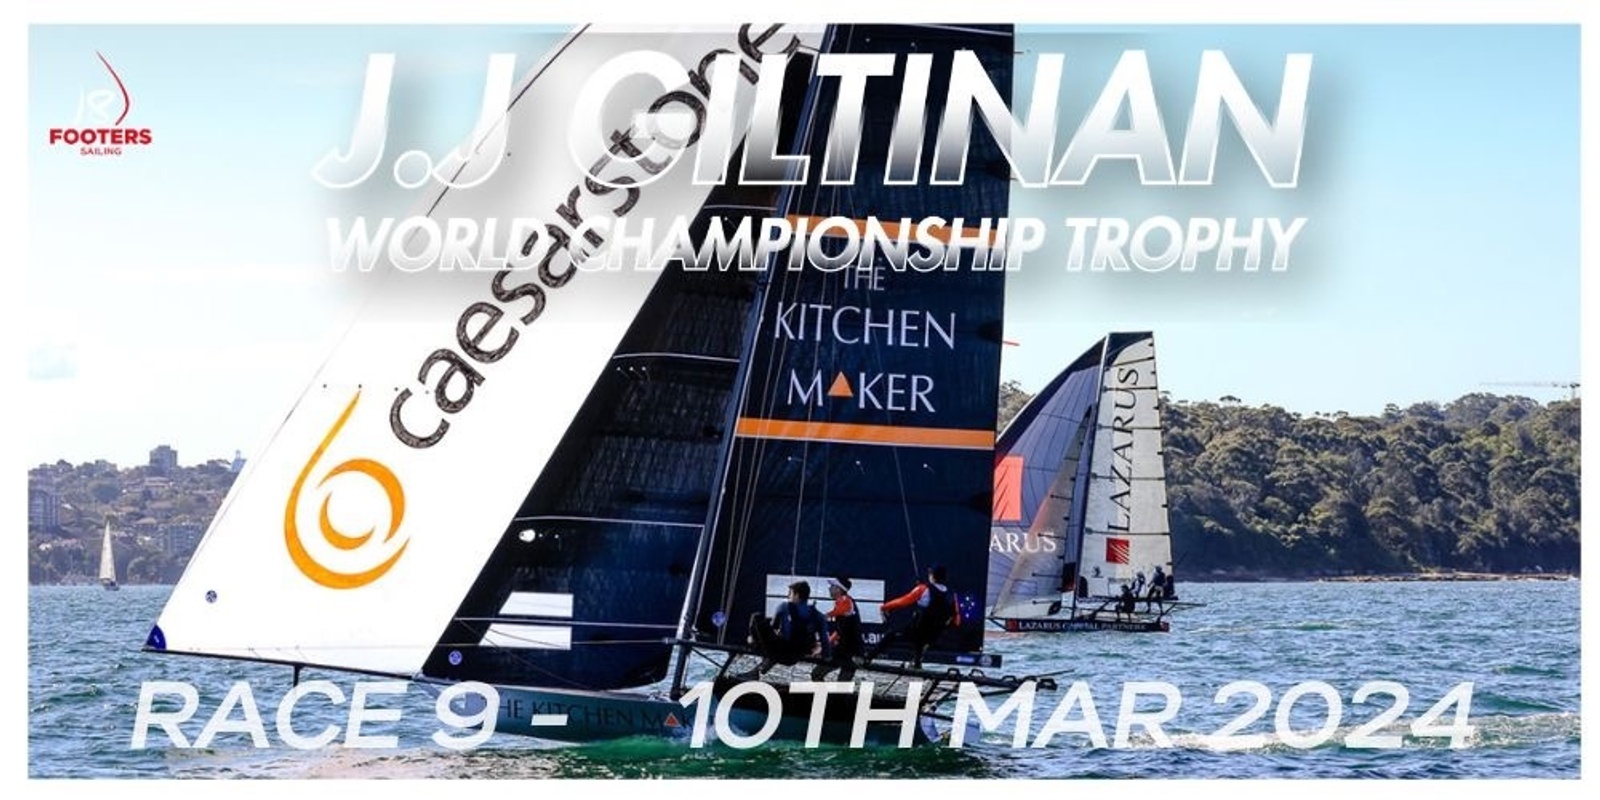 Banner image for JJ Giltinan Race 9 Grand Final